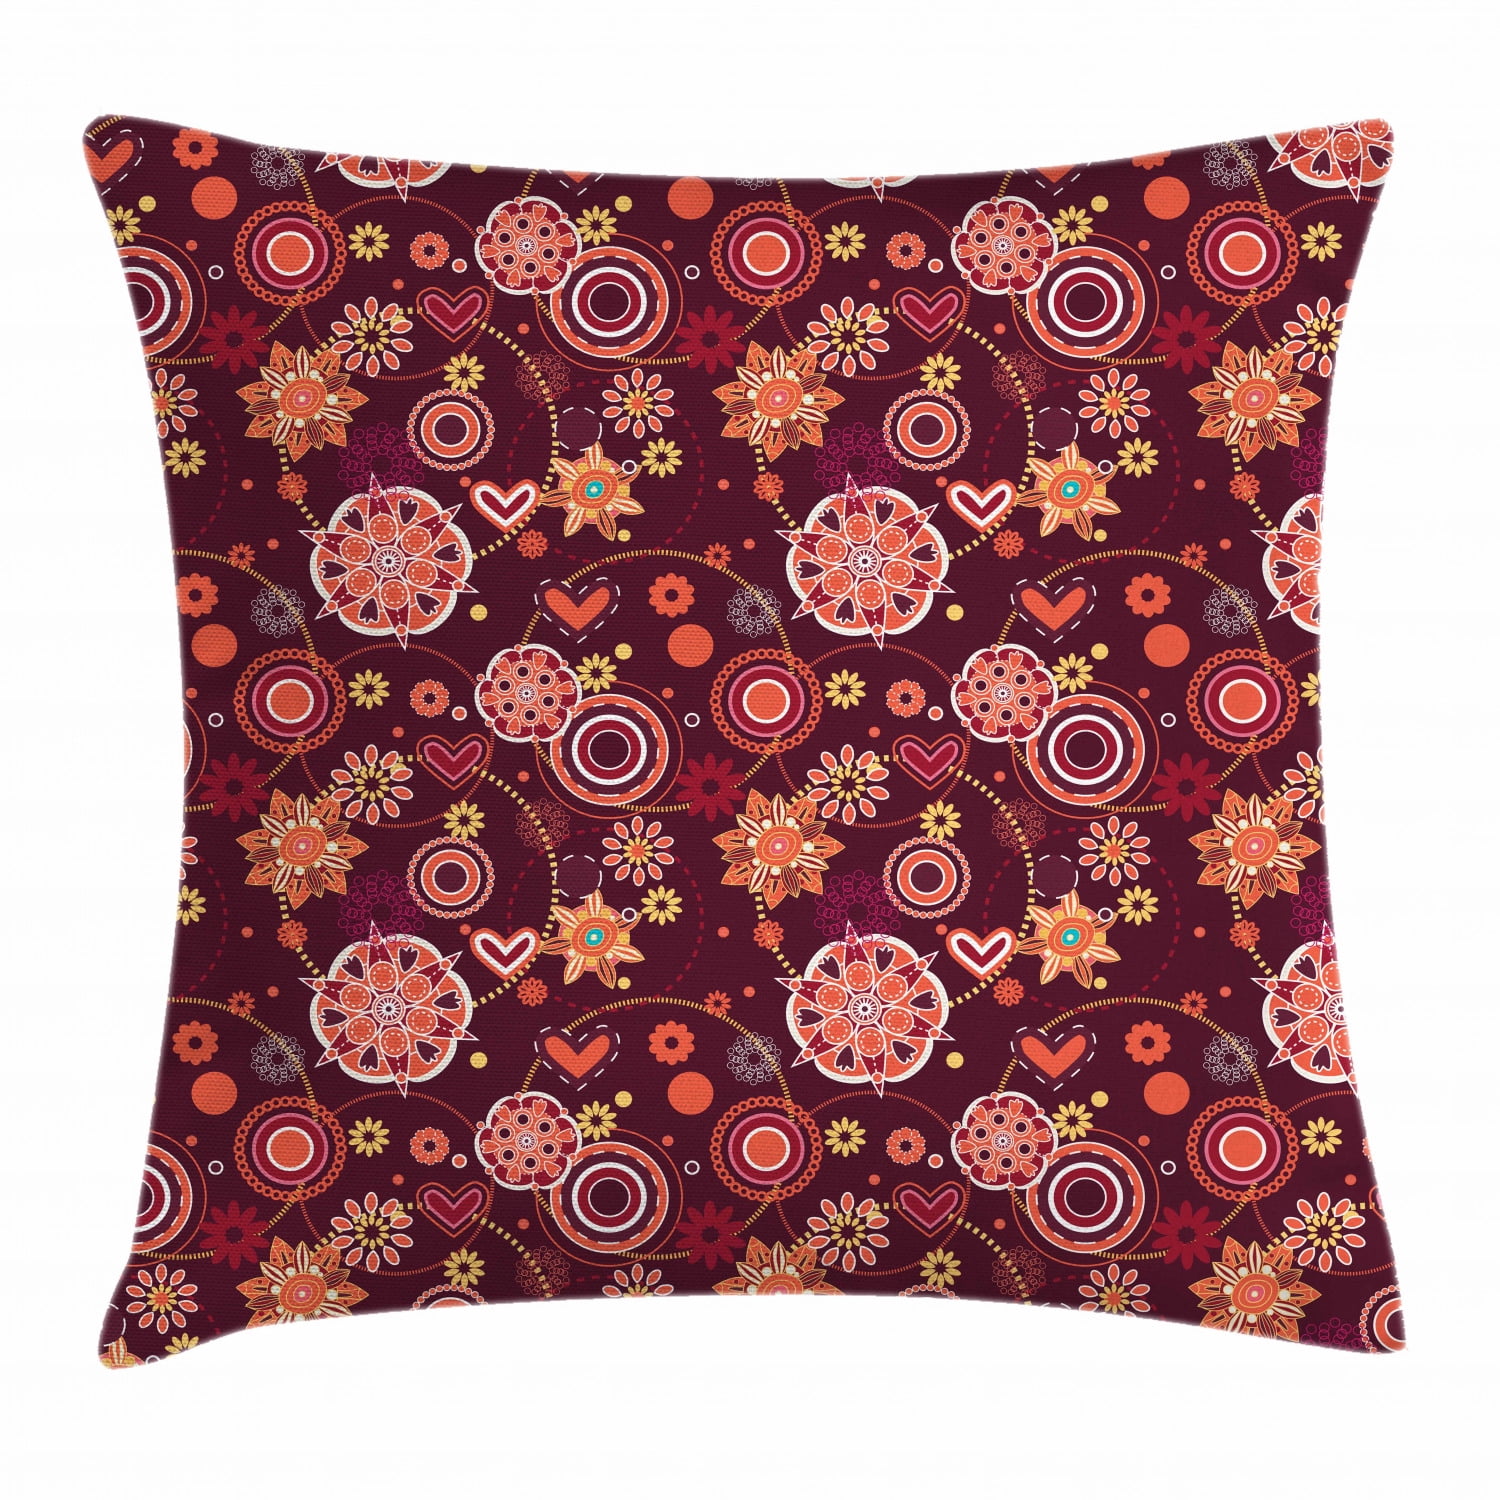 Luxury New floral Vintage Red Orange Blue cushion cover 40cm x 40cm pillowcase 